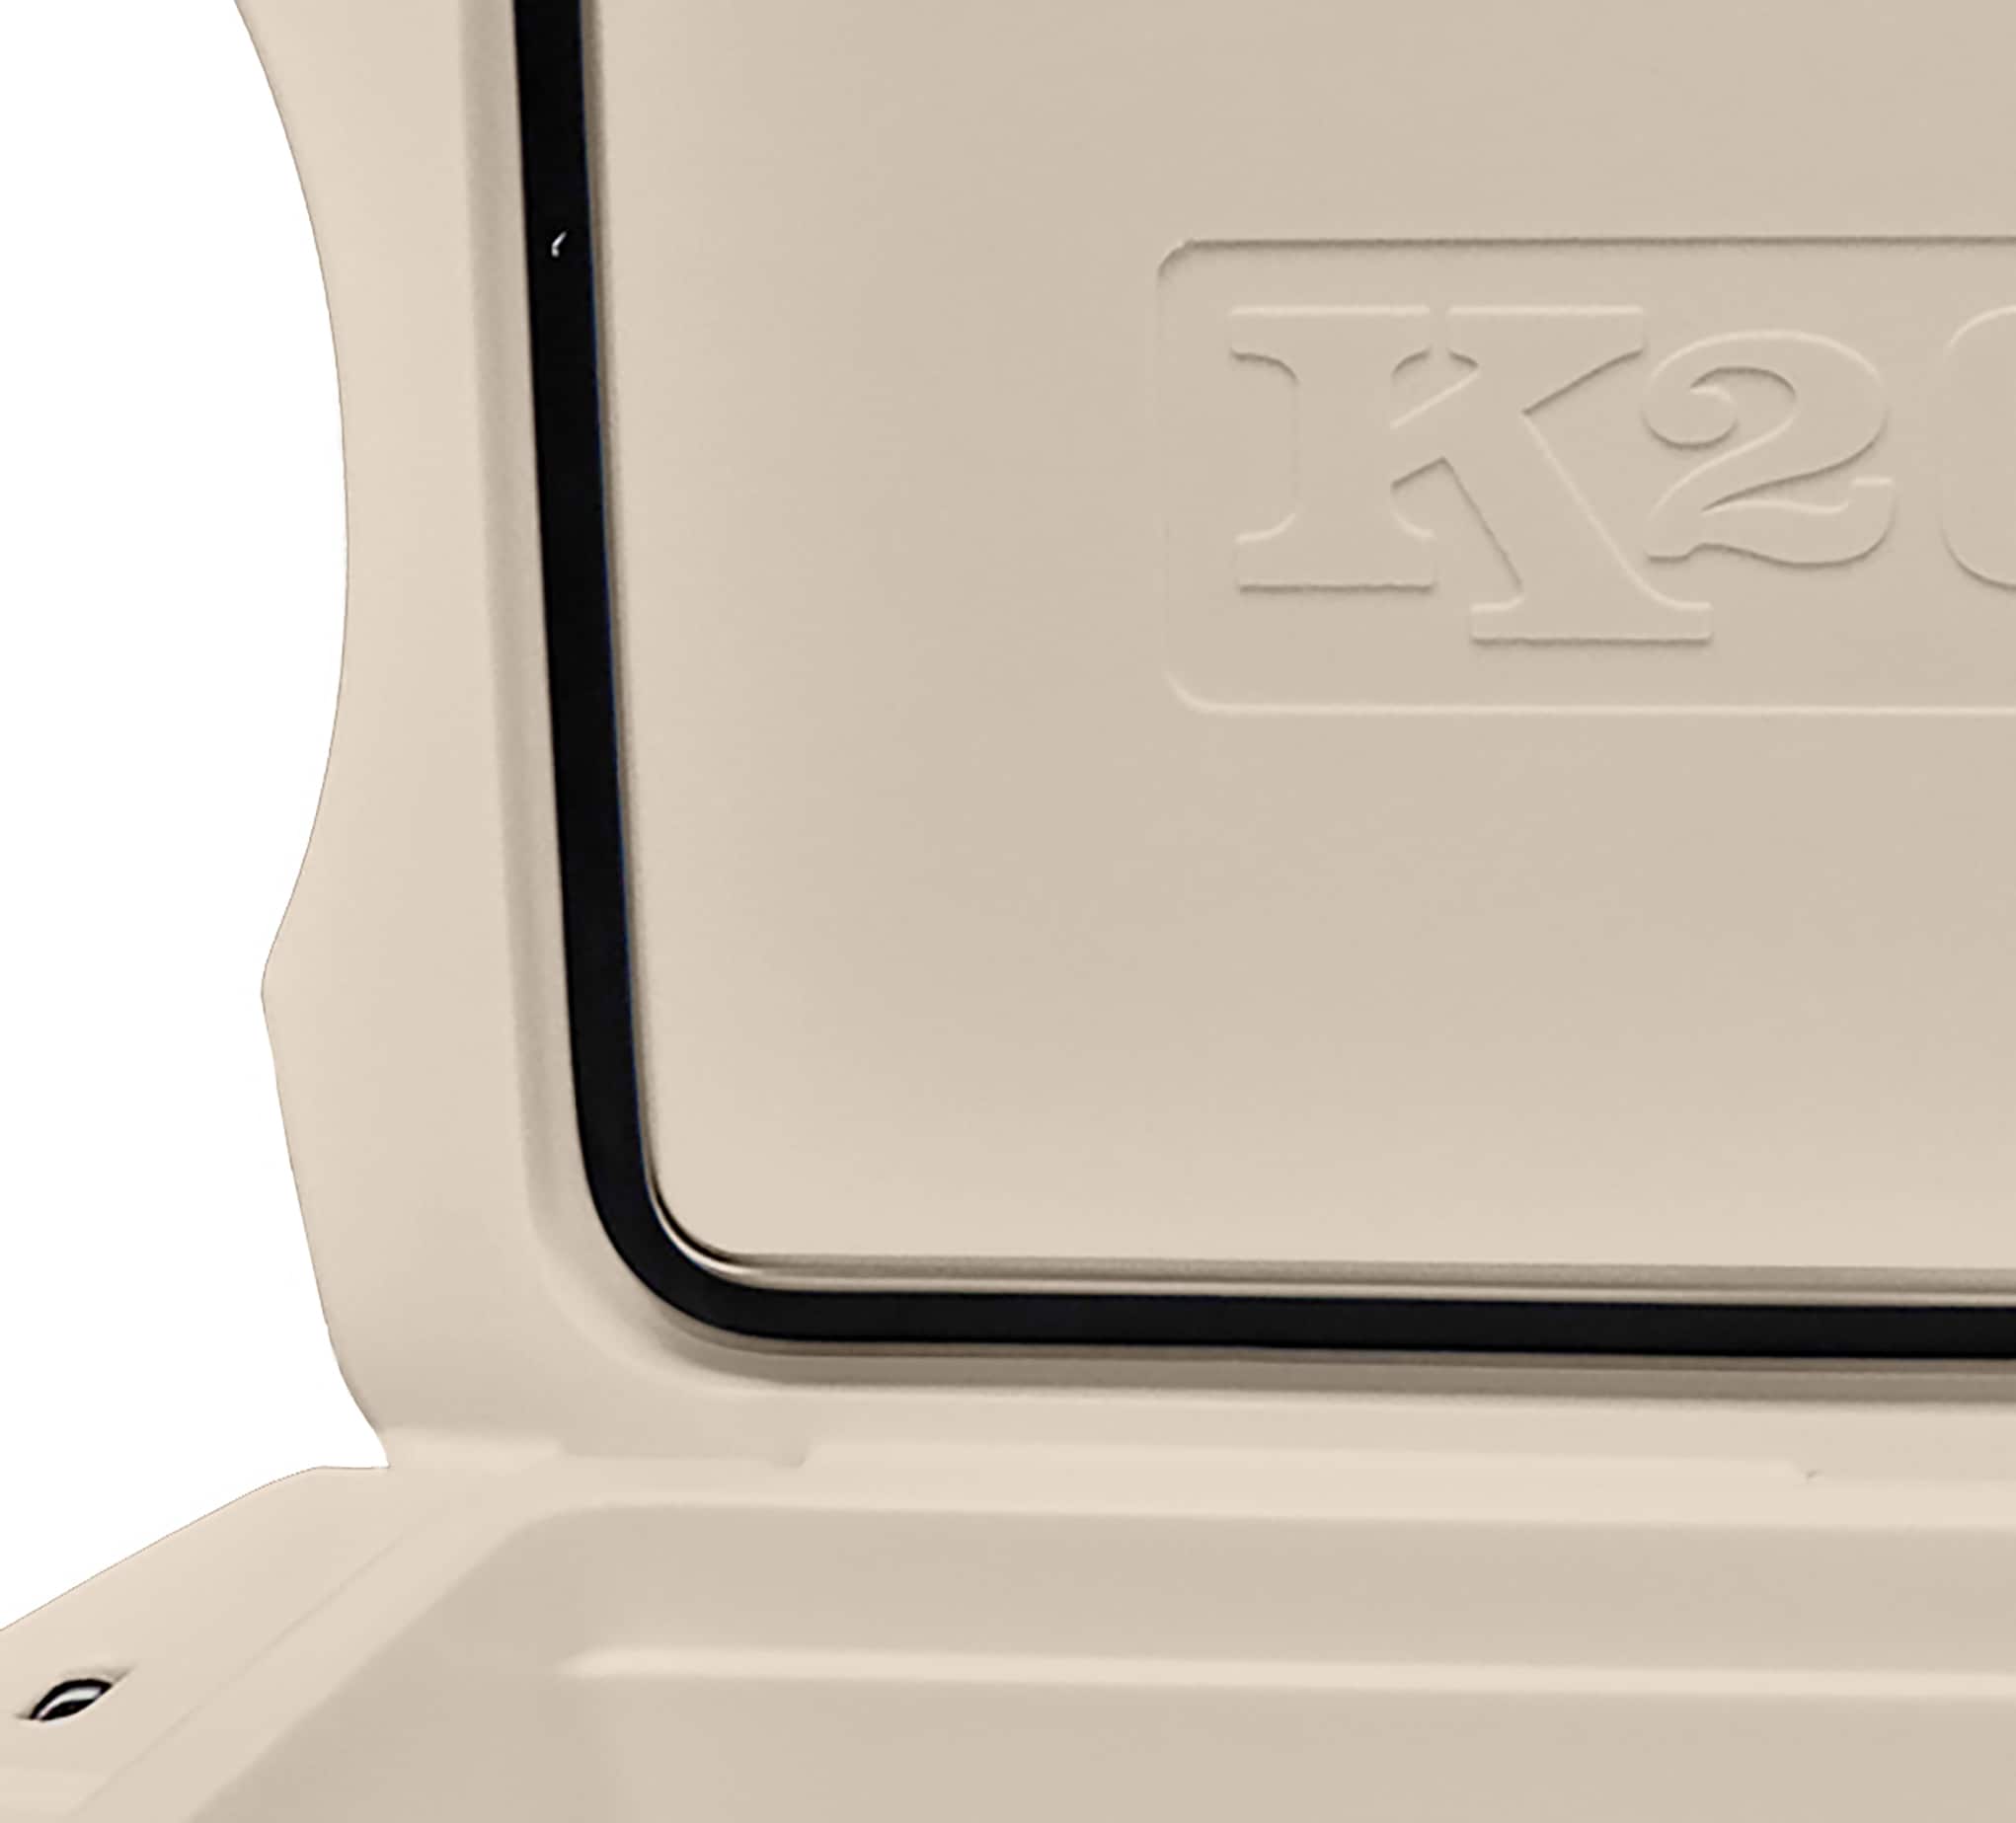 K2 Coolers Vs Yeti Coolers